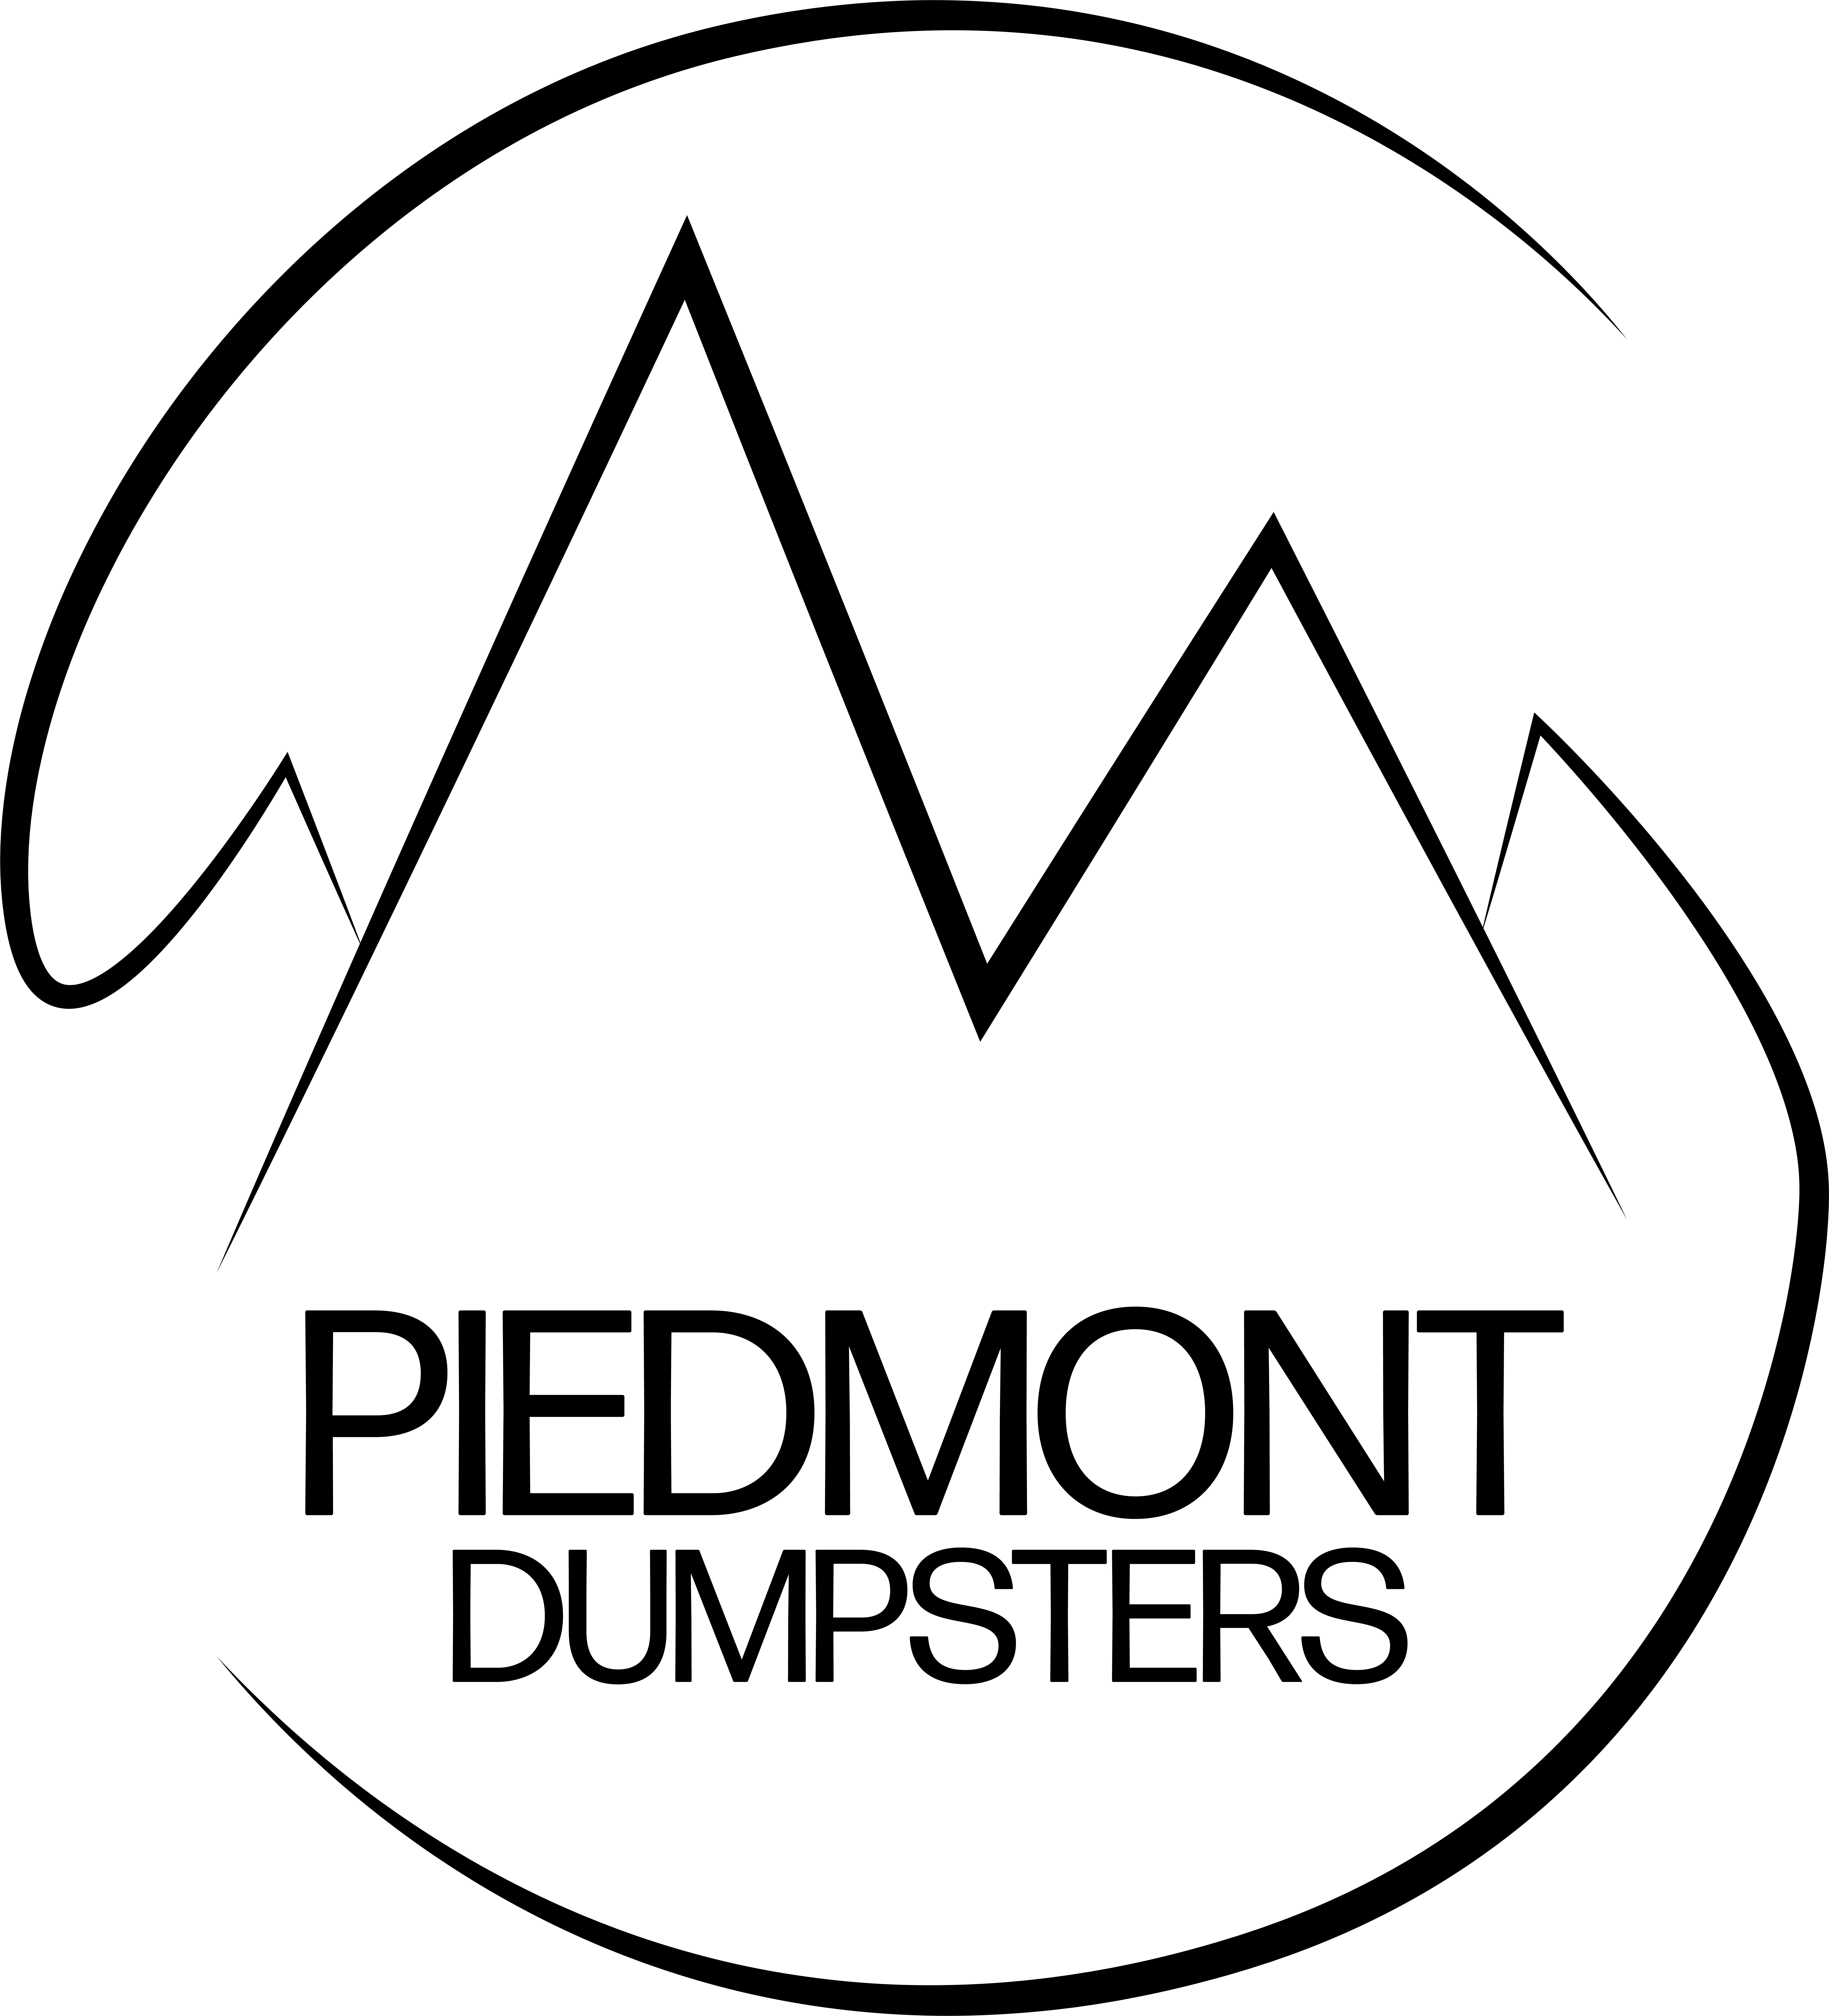 Piedmont Dumpster logo - black